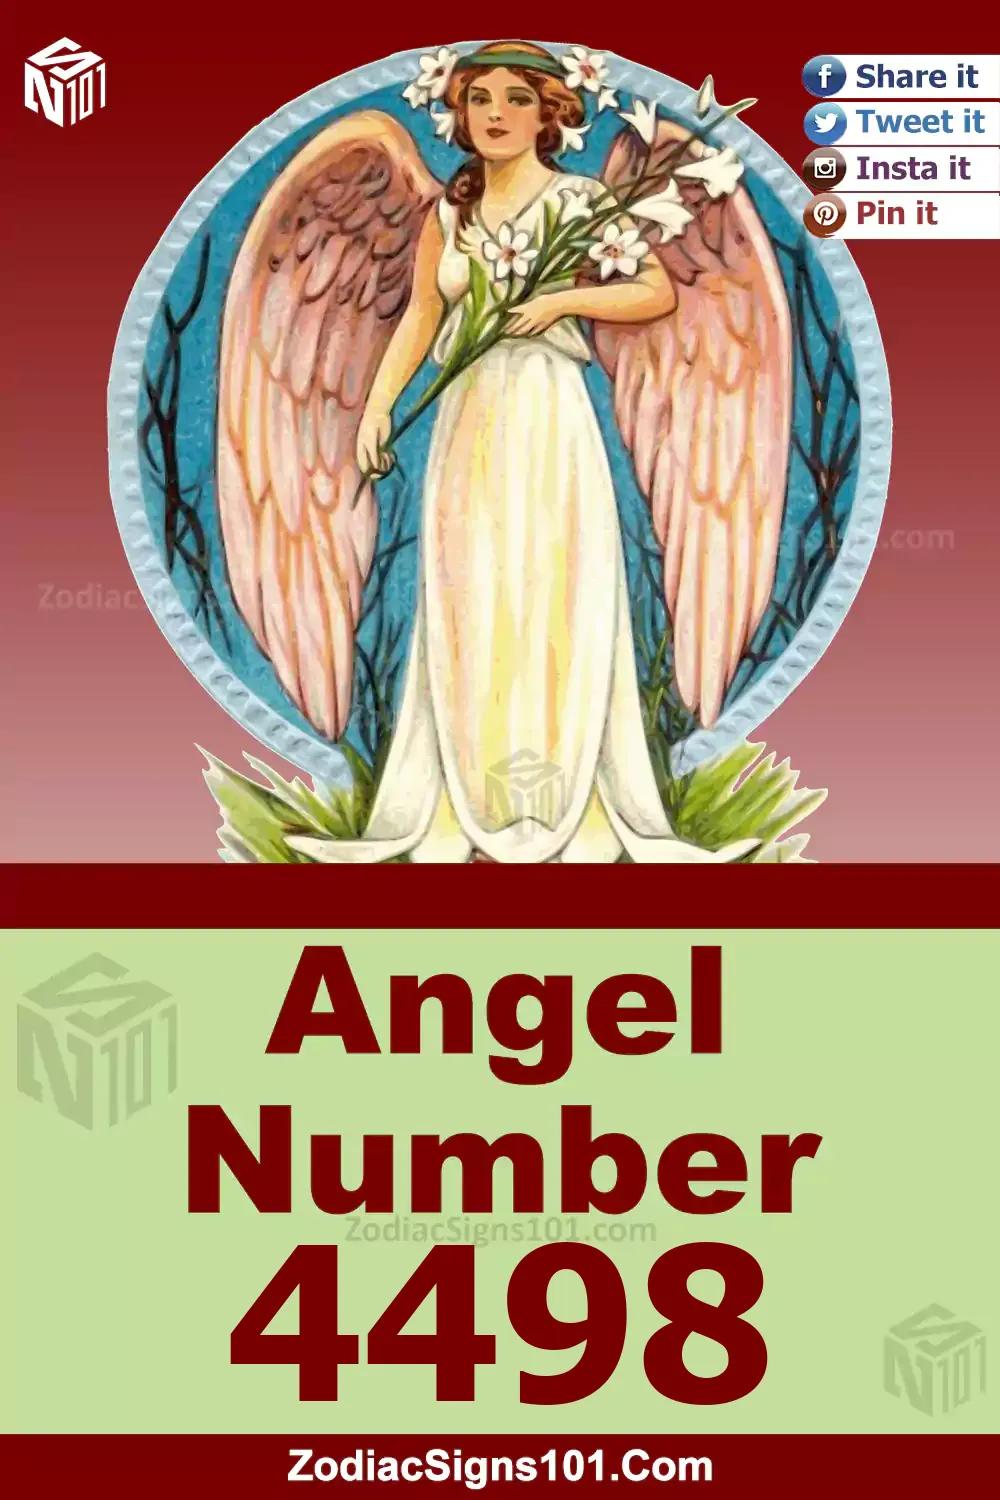 4498-Angel-Number-Meaning.jpg